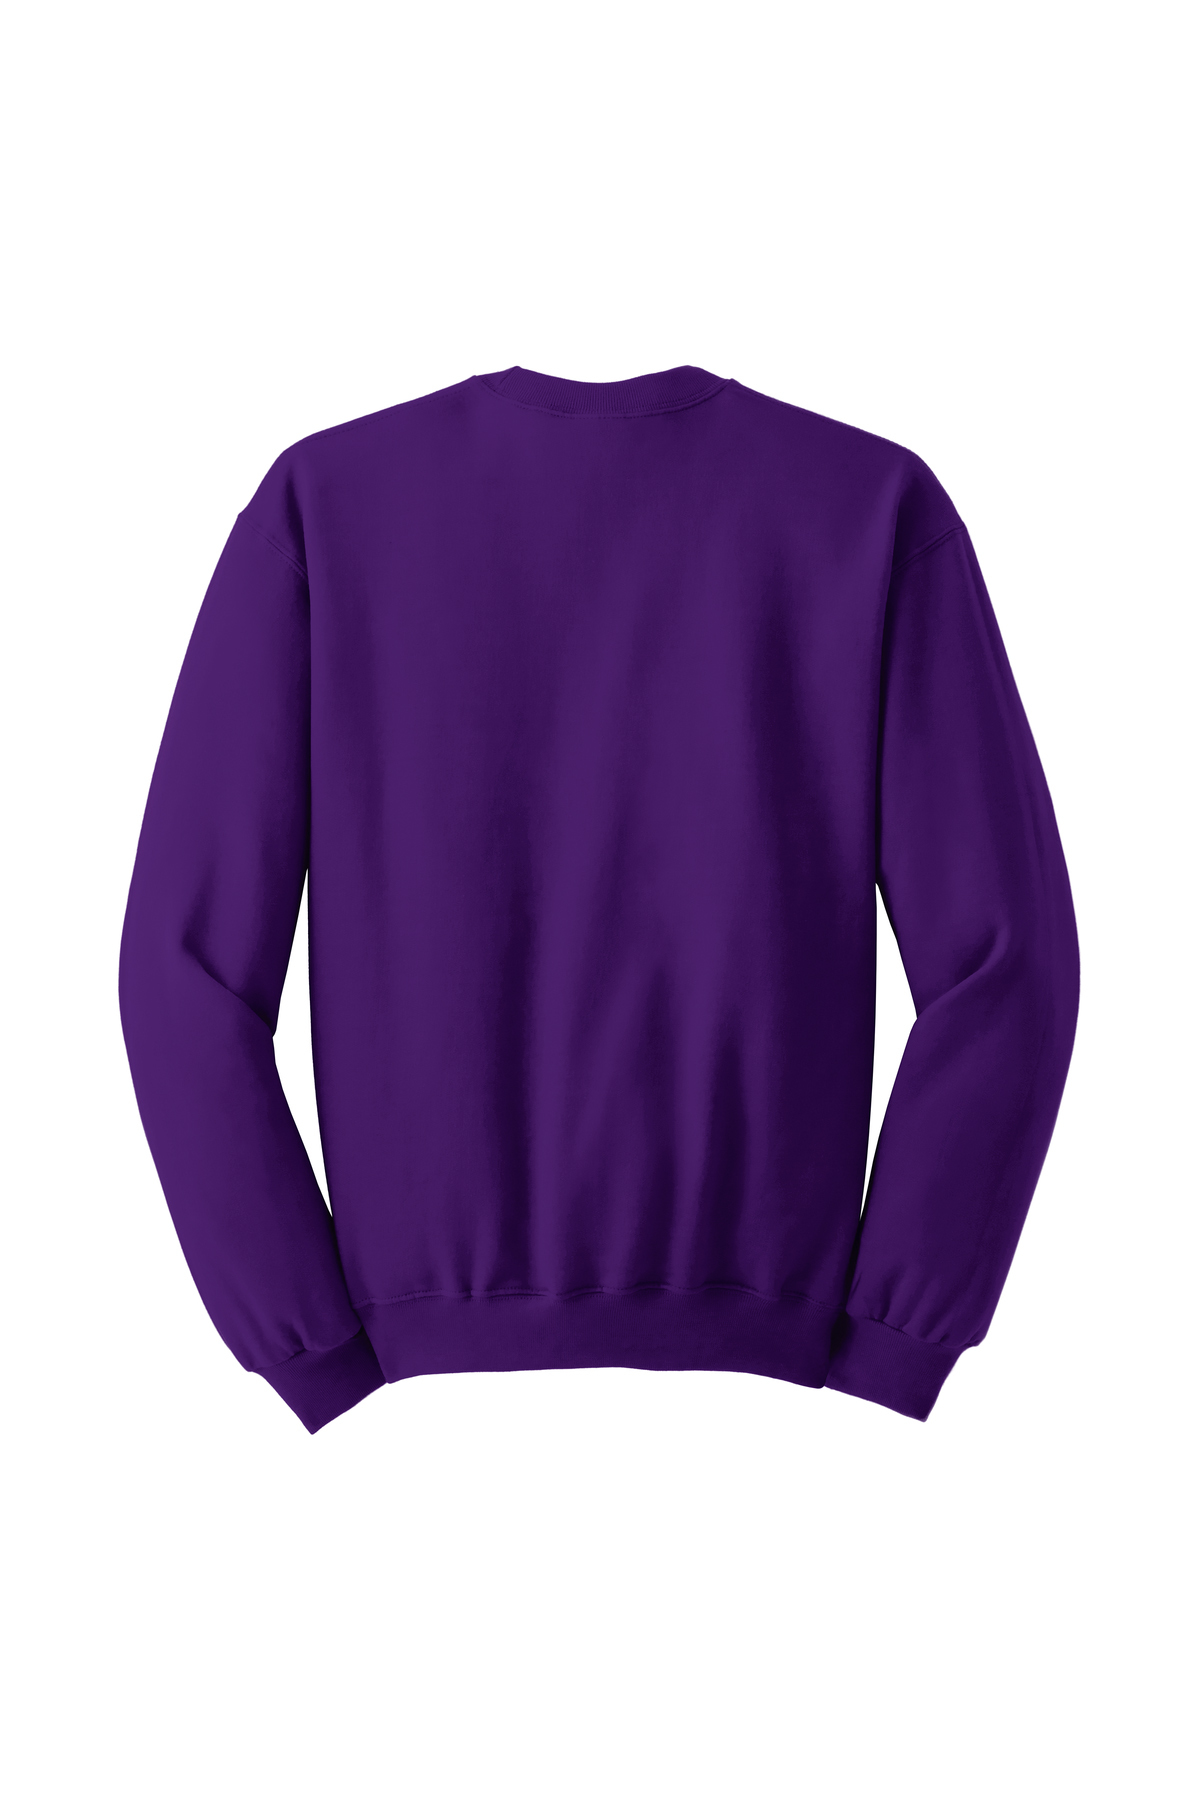 Jerzees - NuBlend Crewneck Sweatshirt | Product | Company Casuals